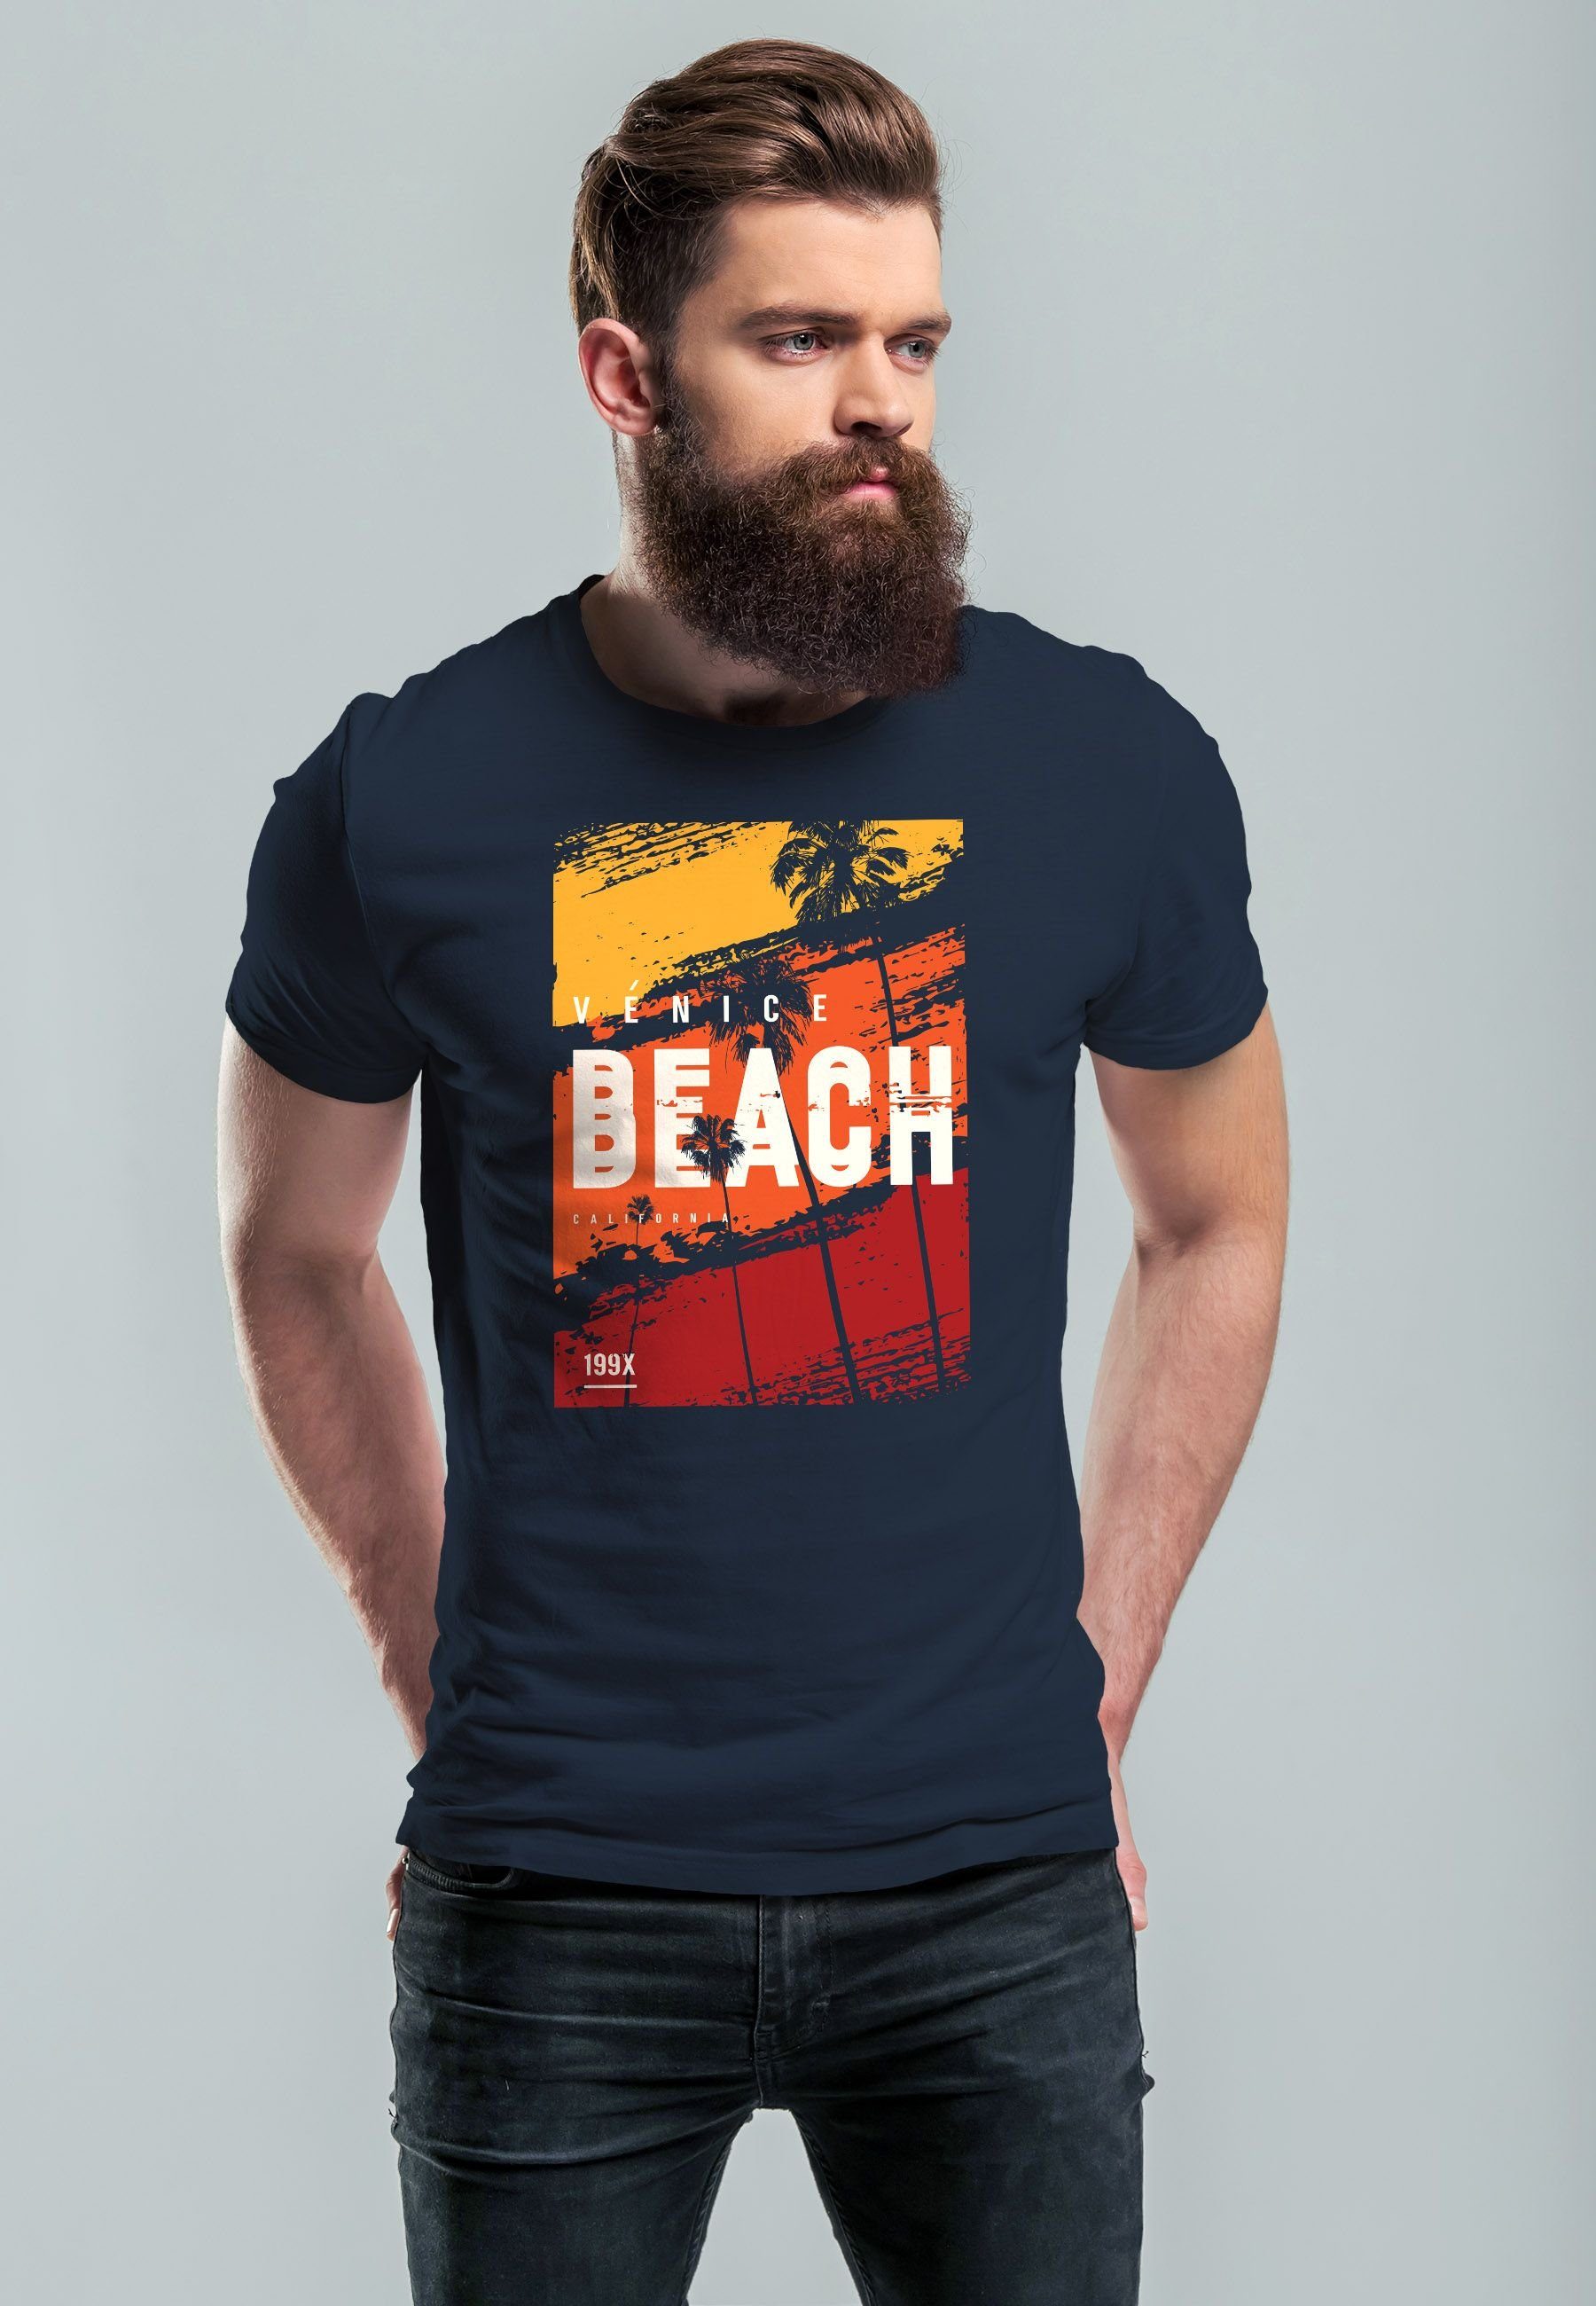 Neverless Print-Shirt Herren Beach Surfing Strand Sommer Venice mit T-Shirt Palme navy Aufdruck Print Motiv